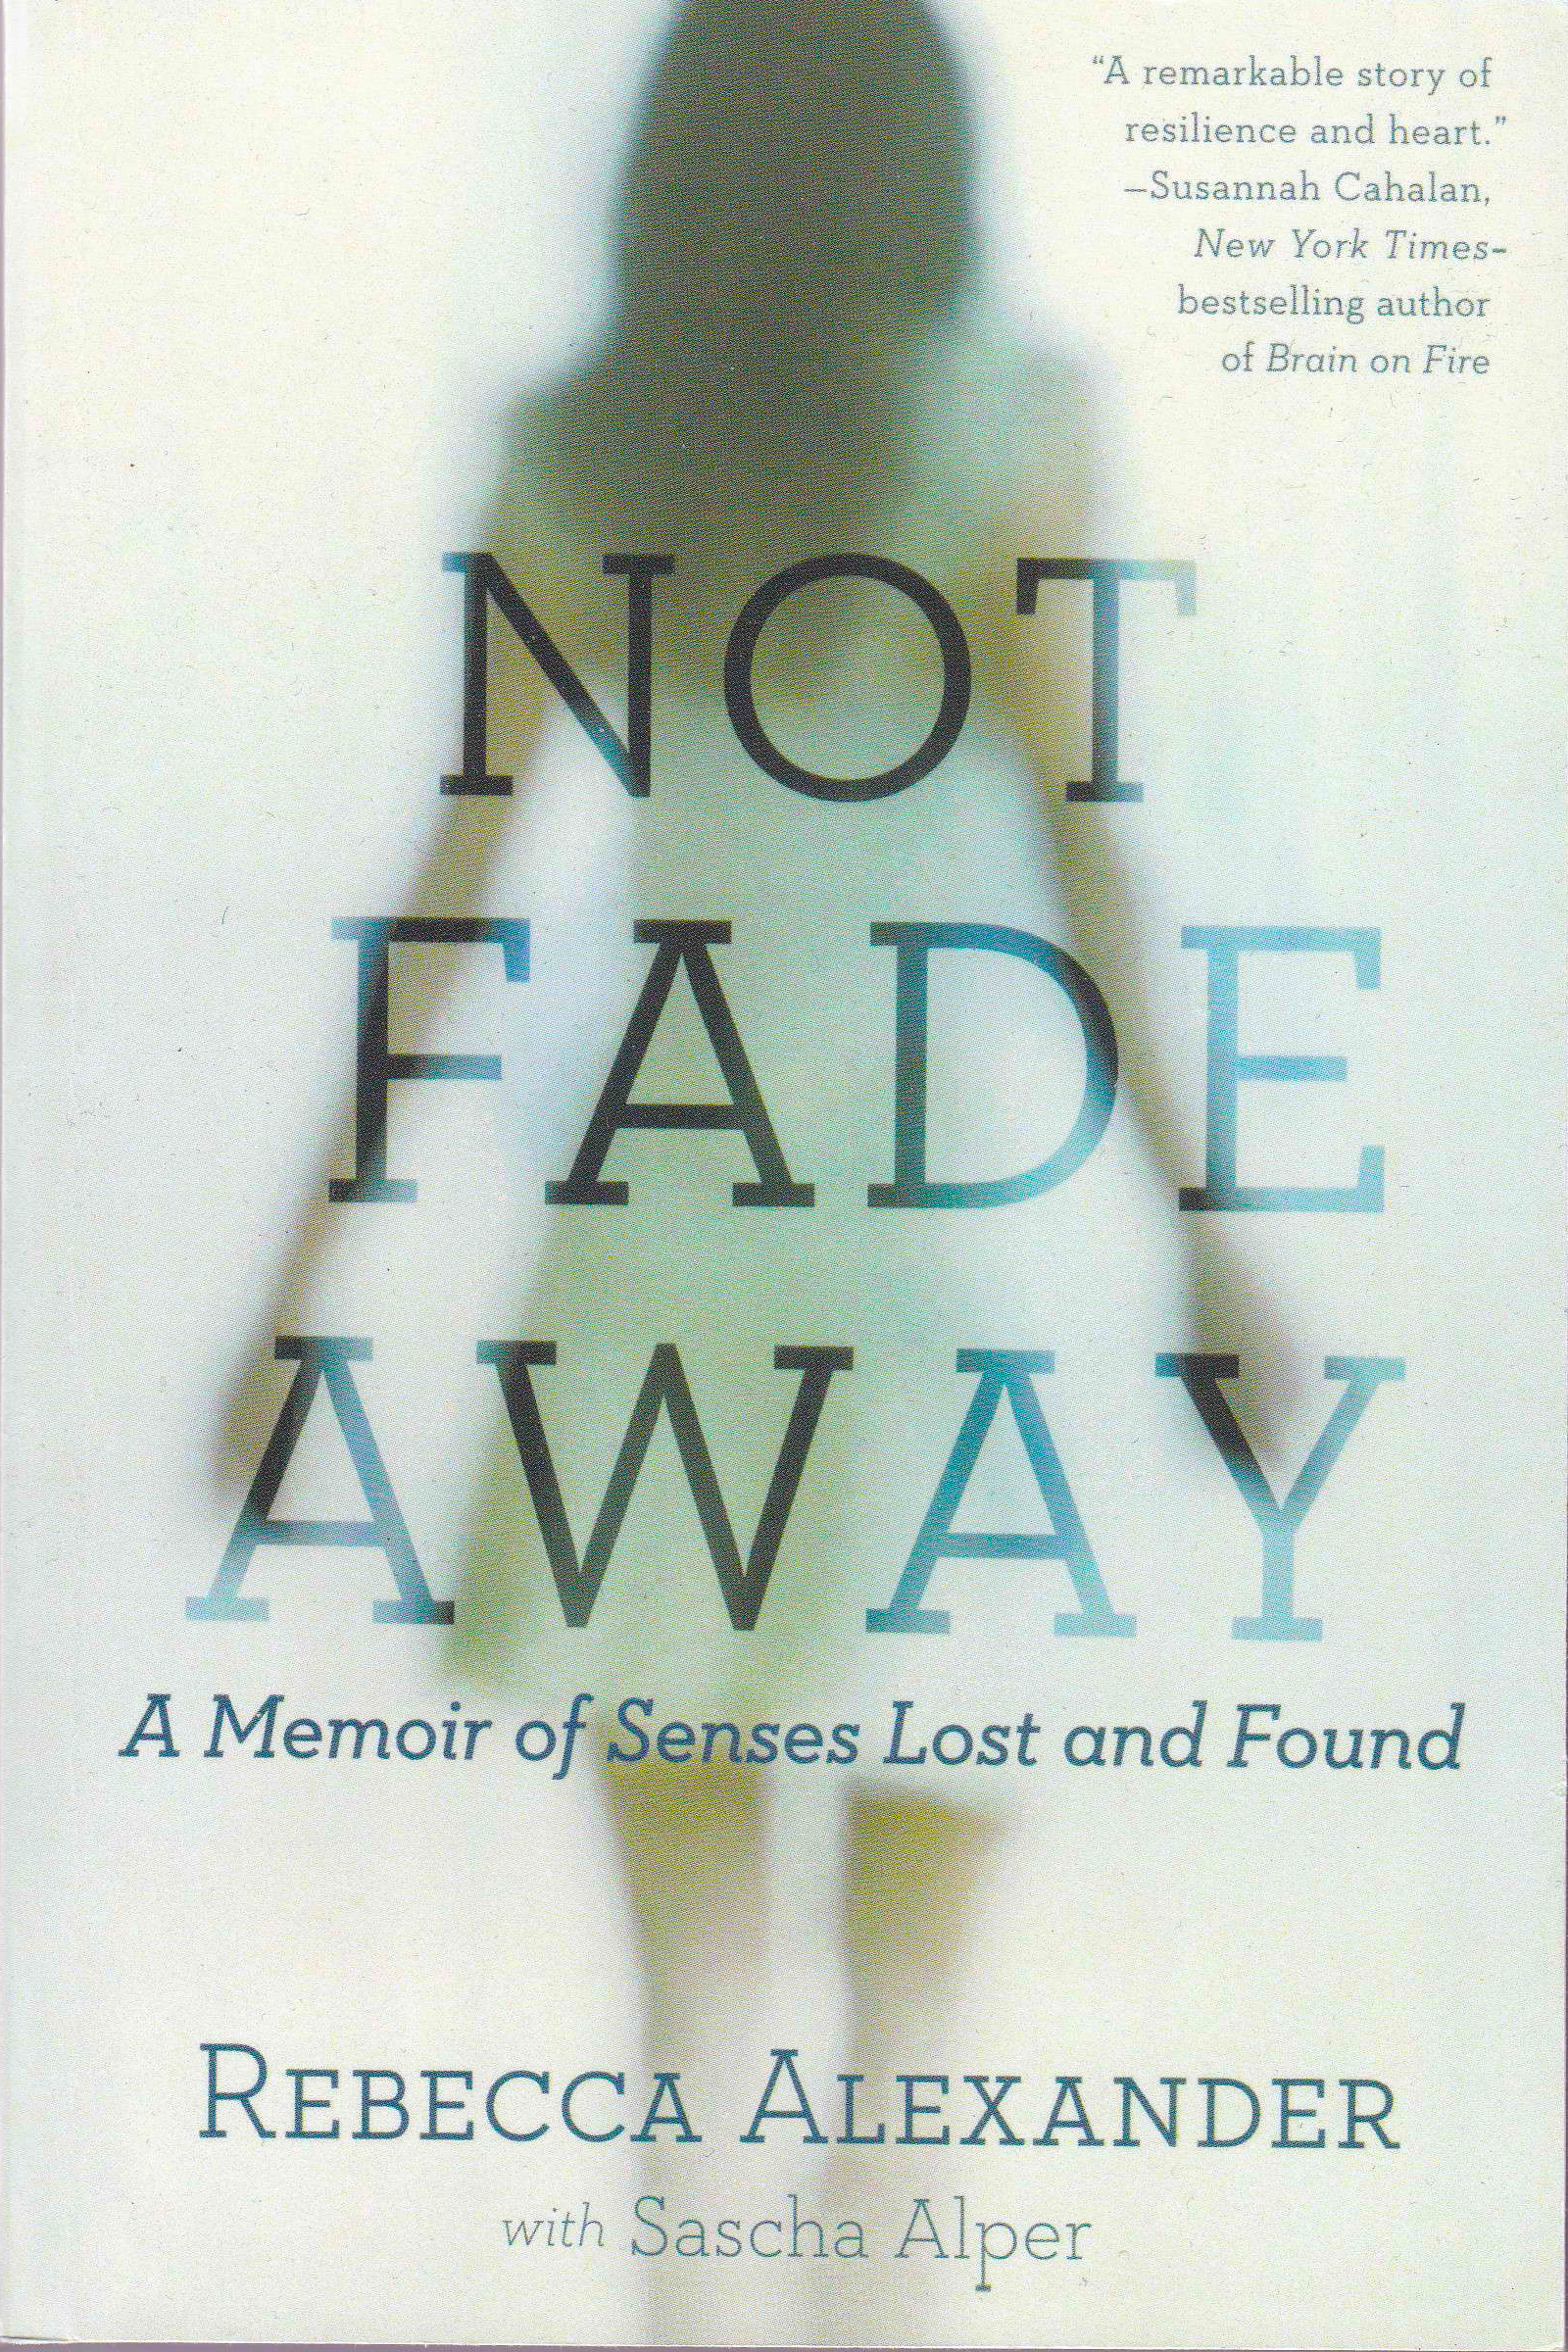 A memoir of senses lost and found